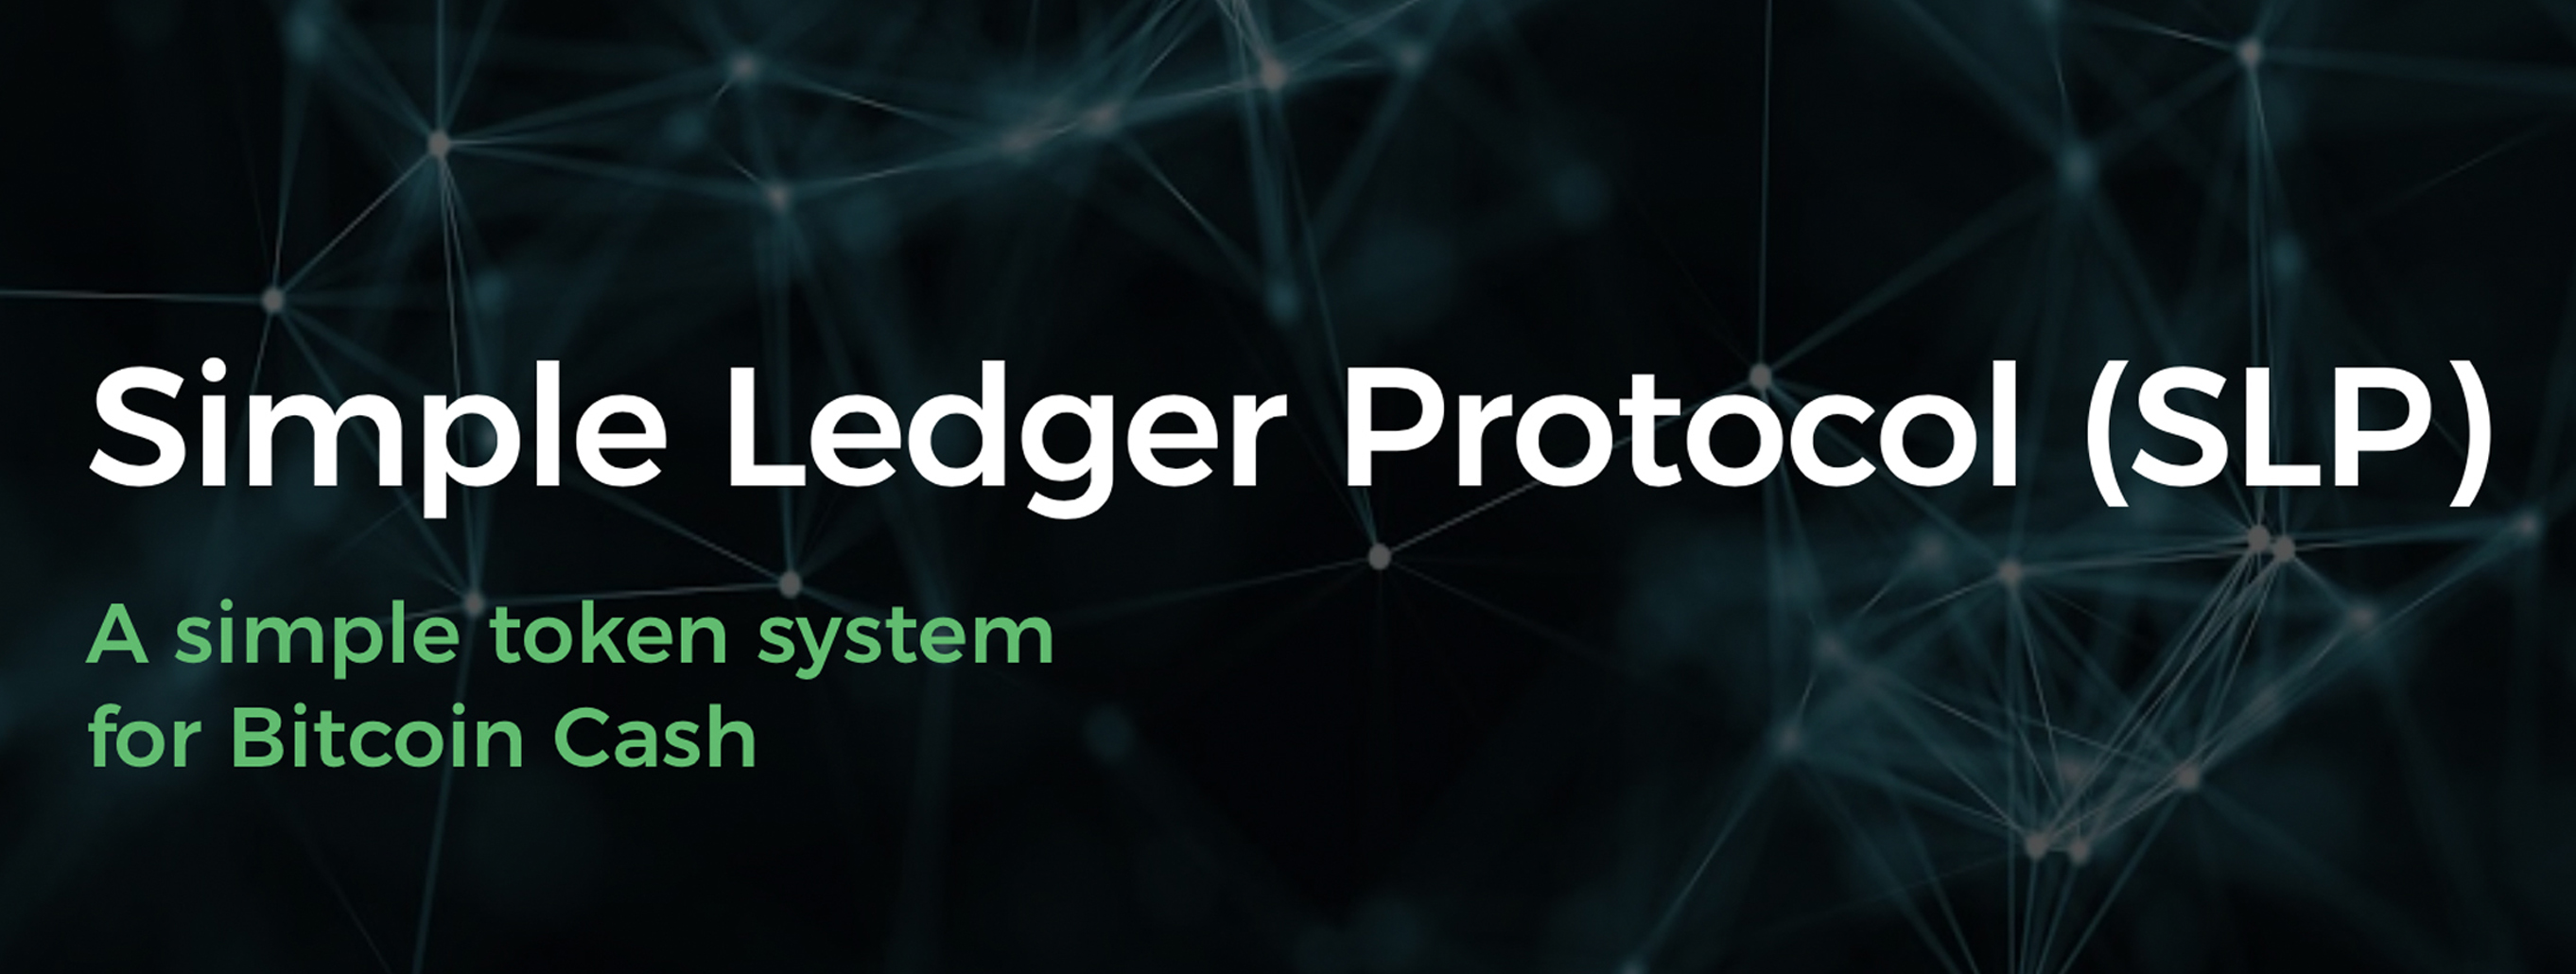 Simple Ledger Protocol Announces Virtual Hackathon Devoted to SLP Token Ecosystem